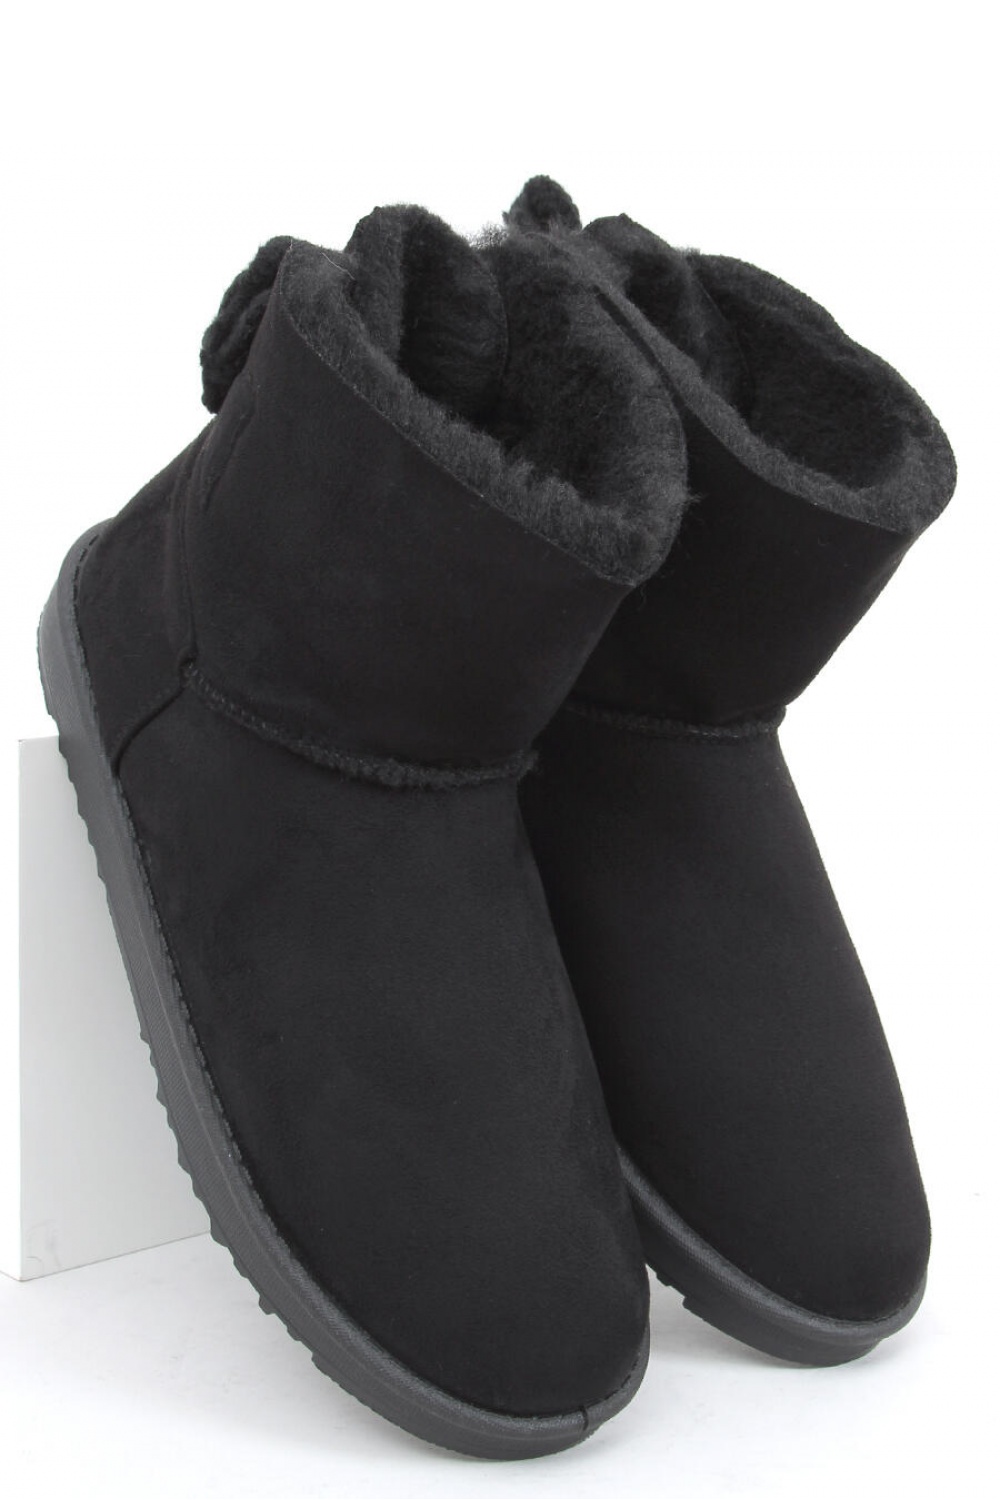  Snow boots model 160667 Inello  black